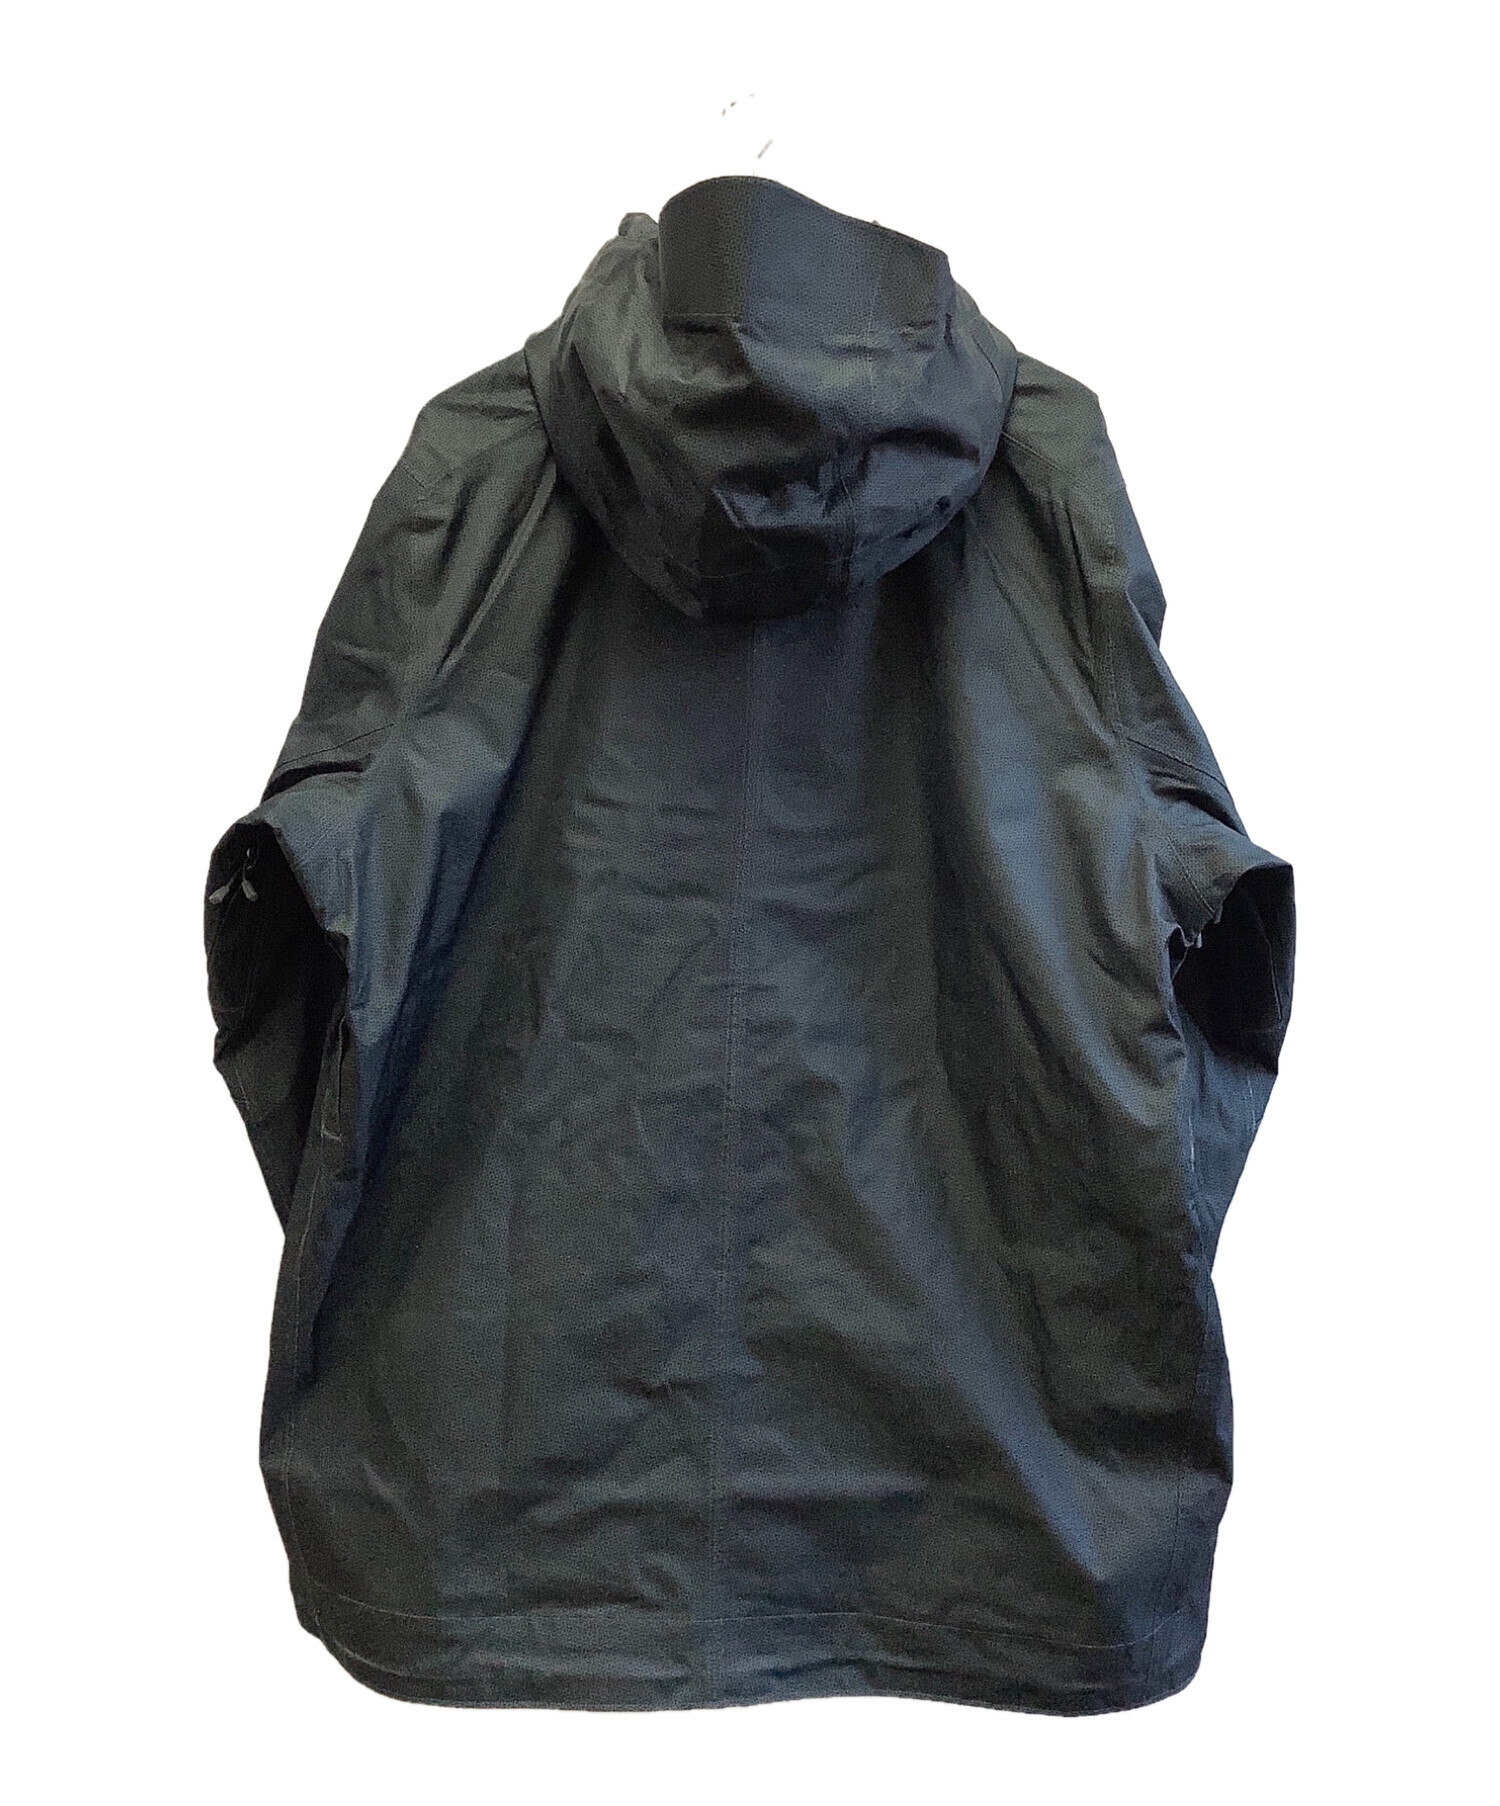 Patagonia (パタゴニア) スノーショットジャケット グレー サイズ:L